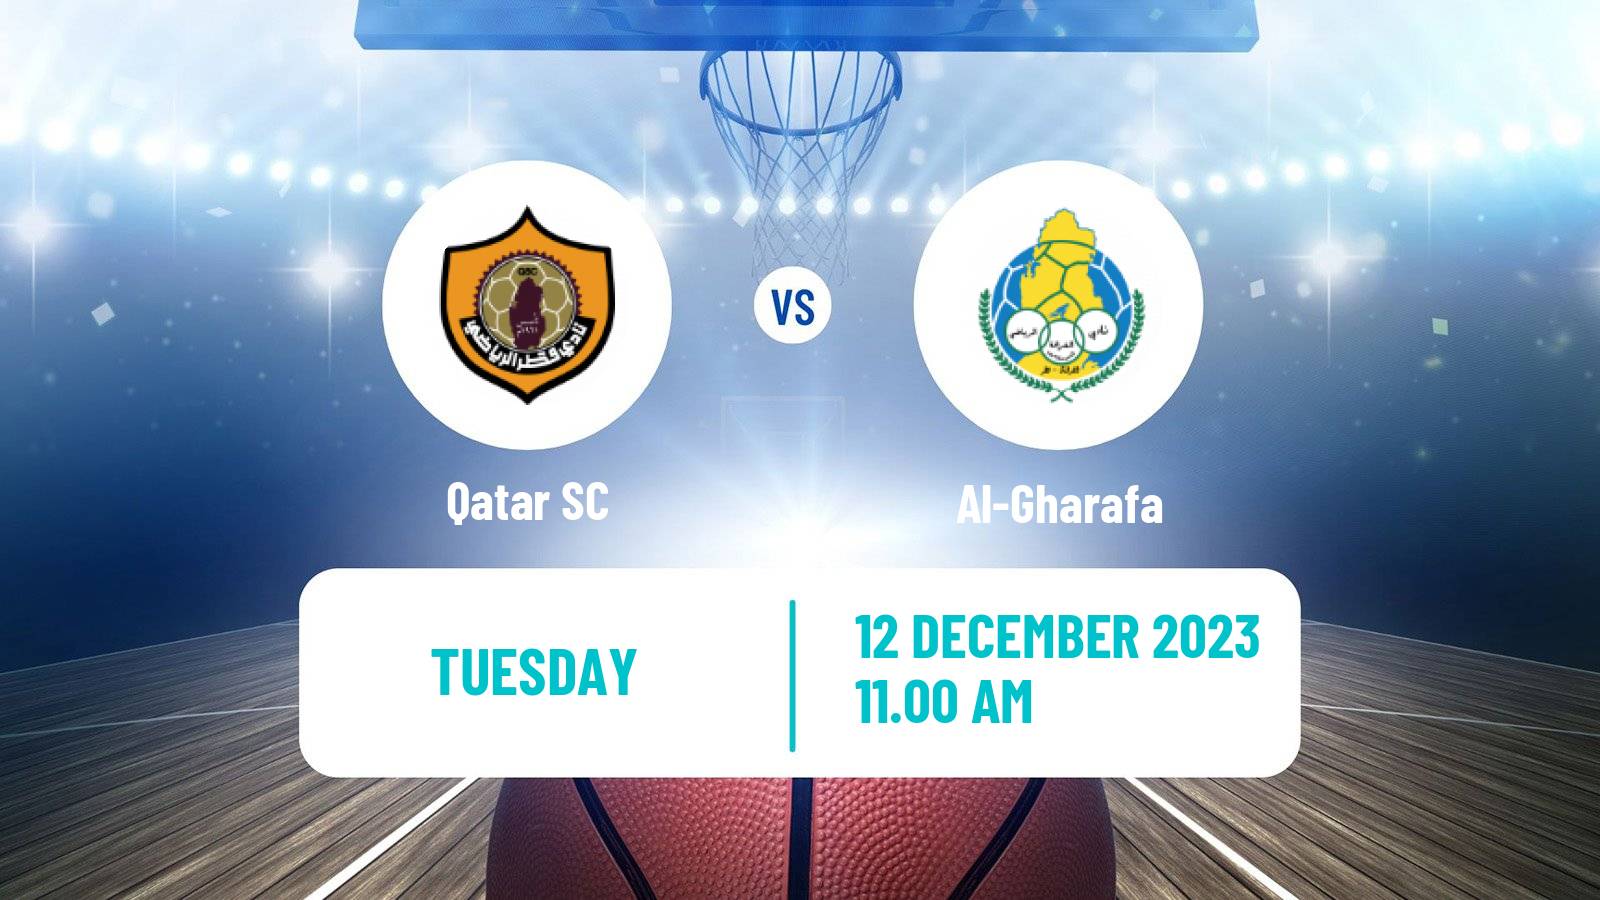 Basketball Qatar Basketball League Qatar SC - Al-Gharafa